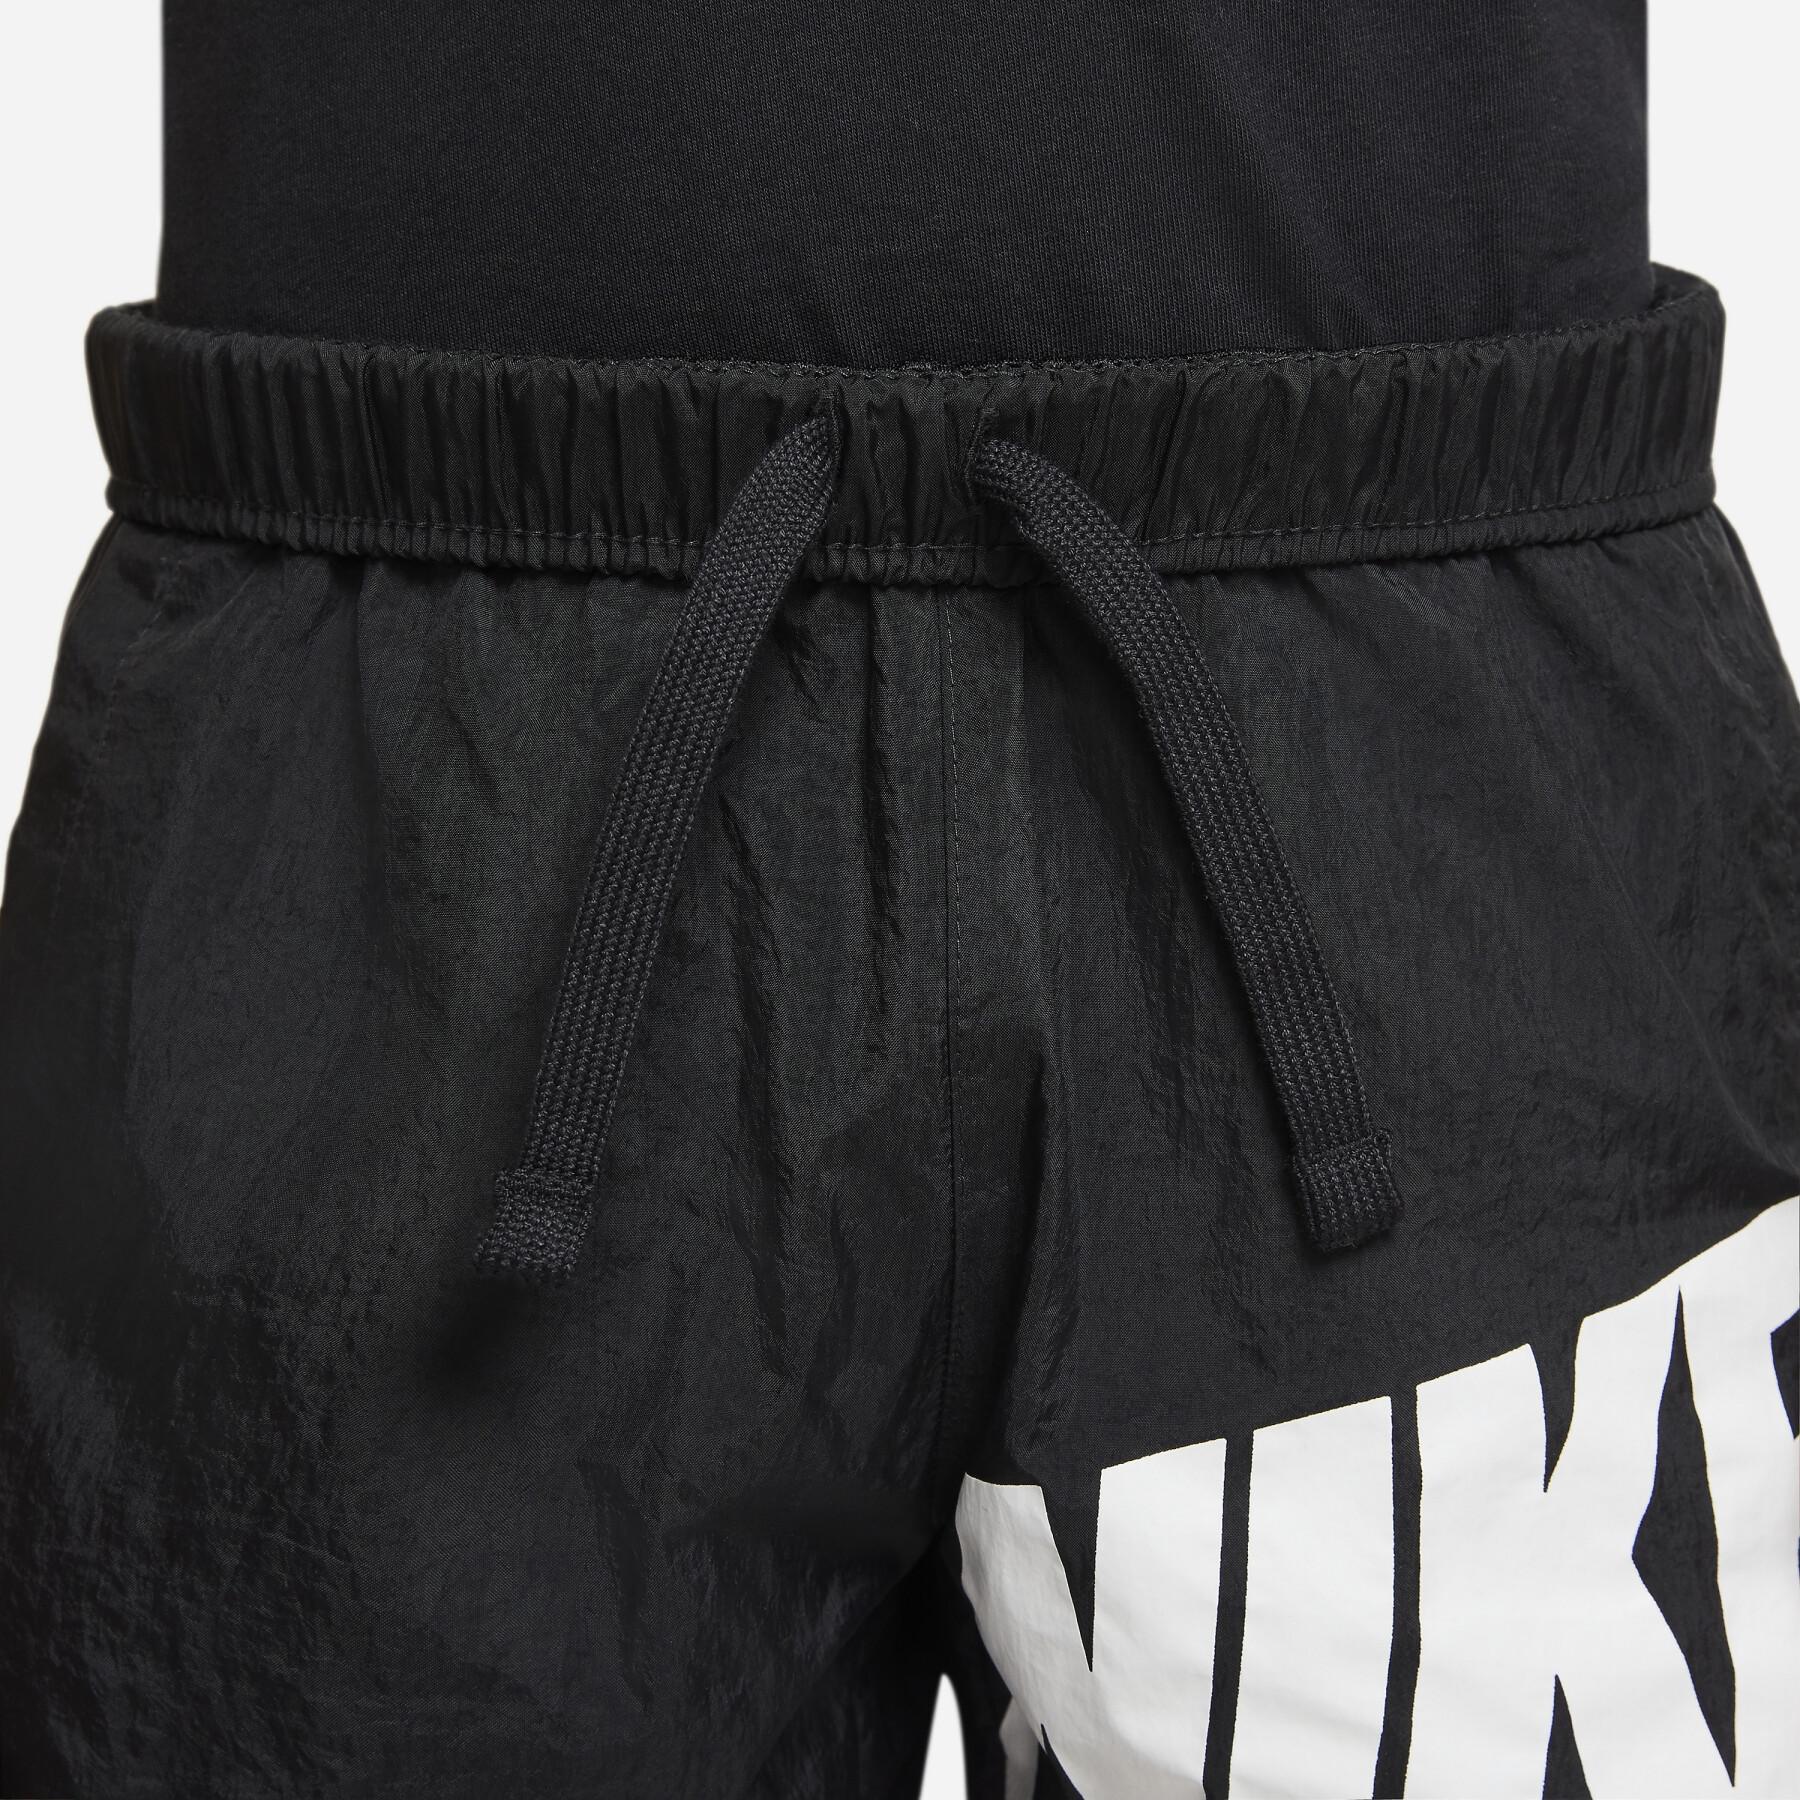 Kinder shorts Nike HBR